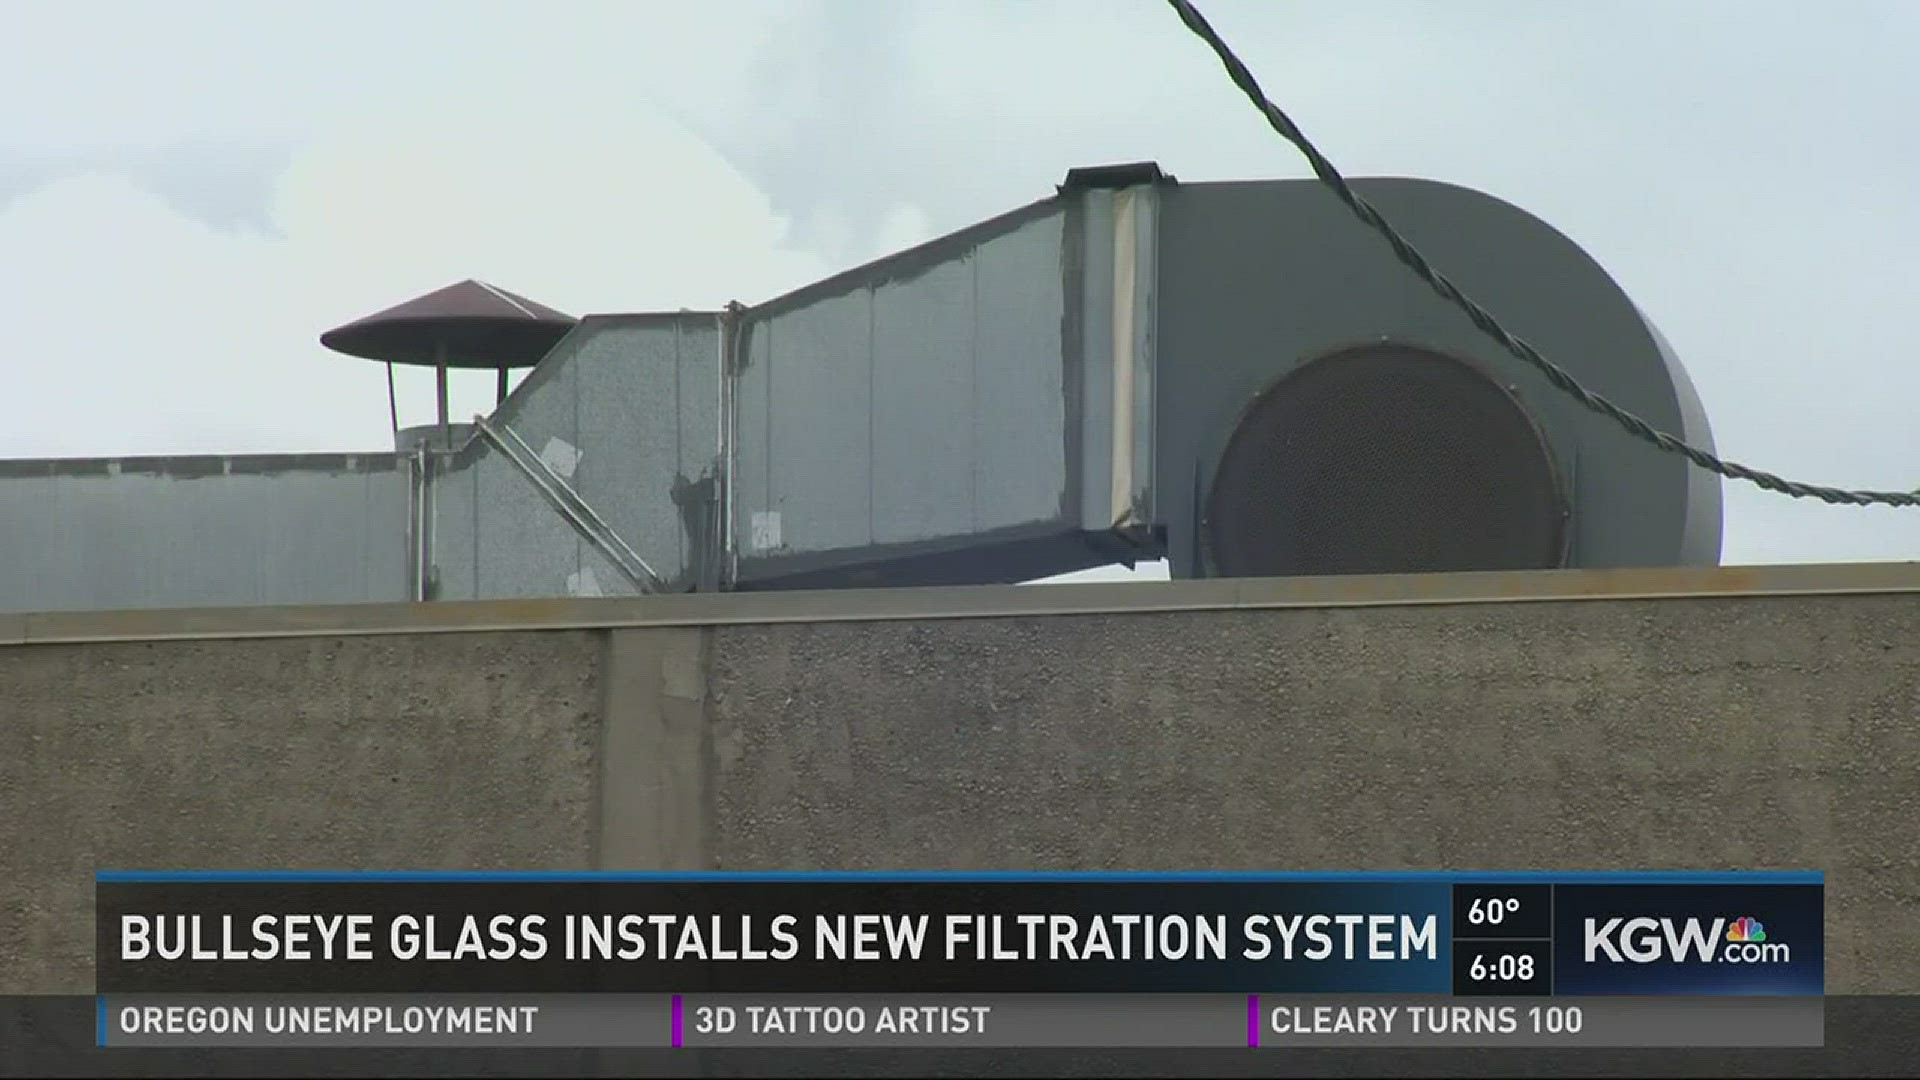 Bullseye Glass installs new filtration system